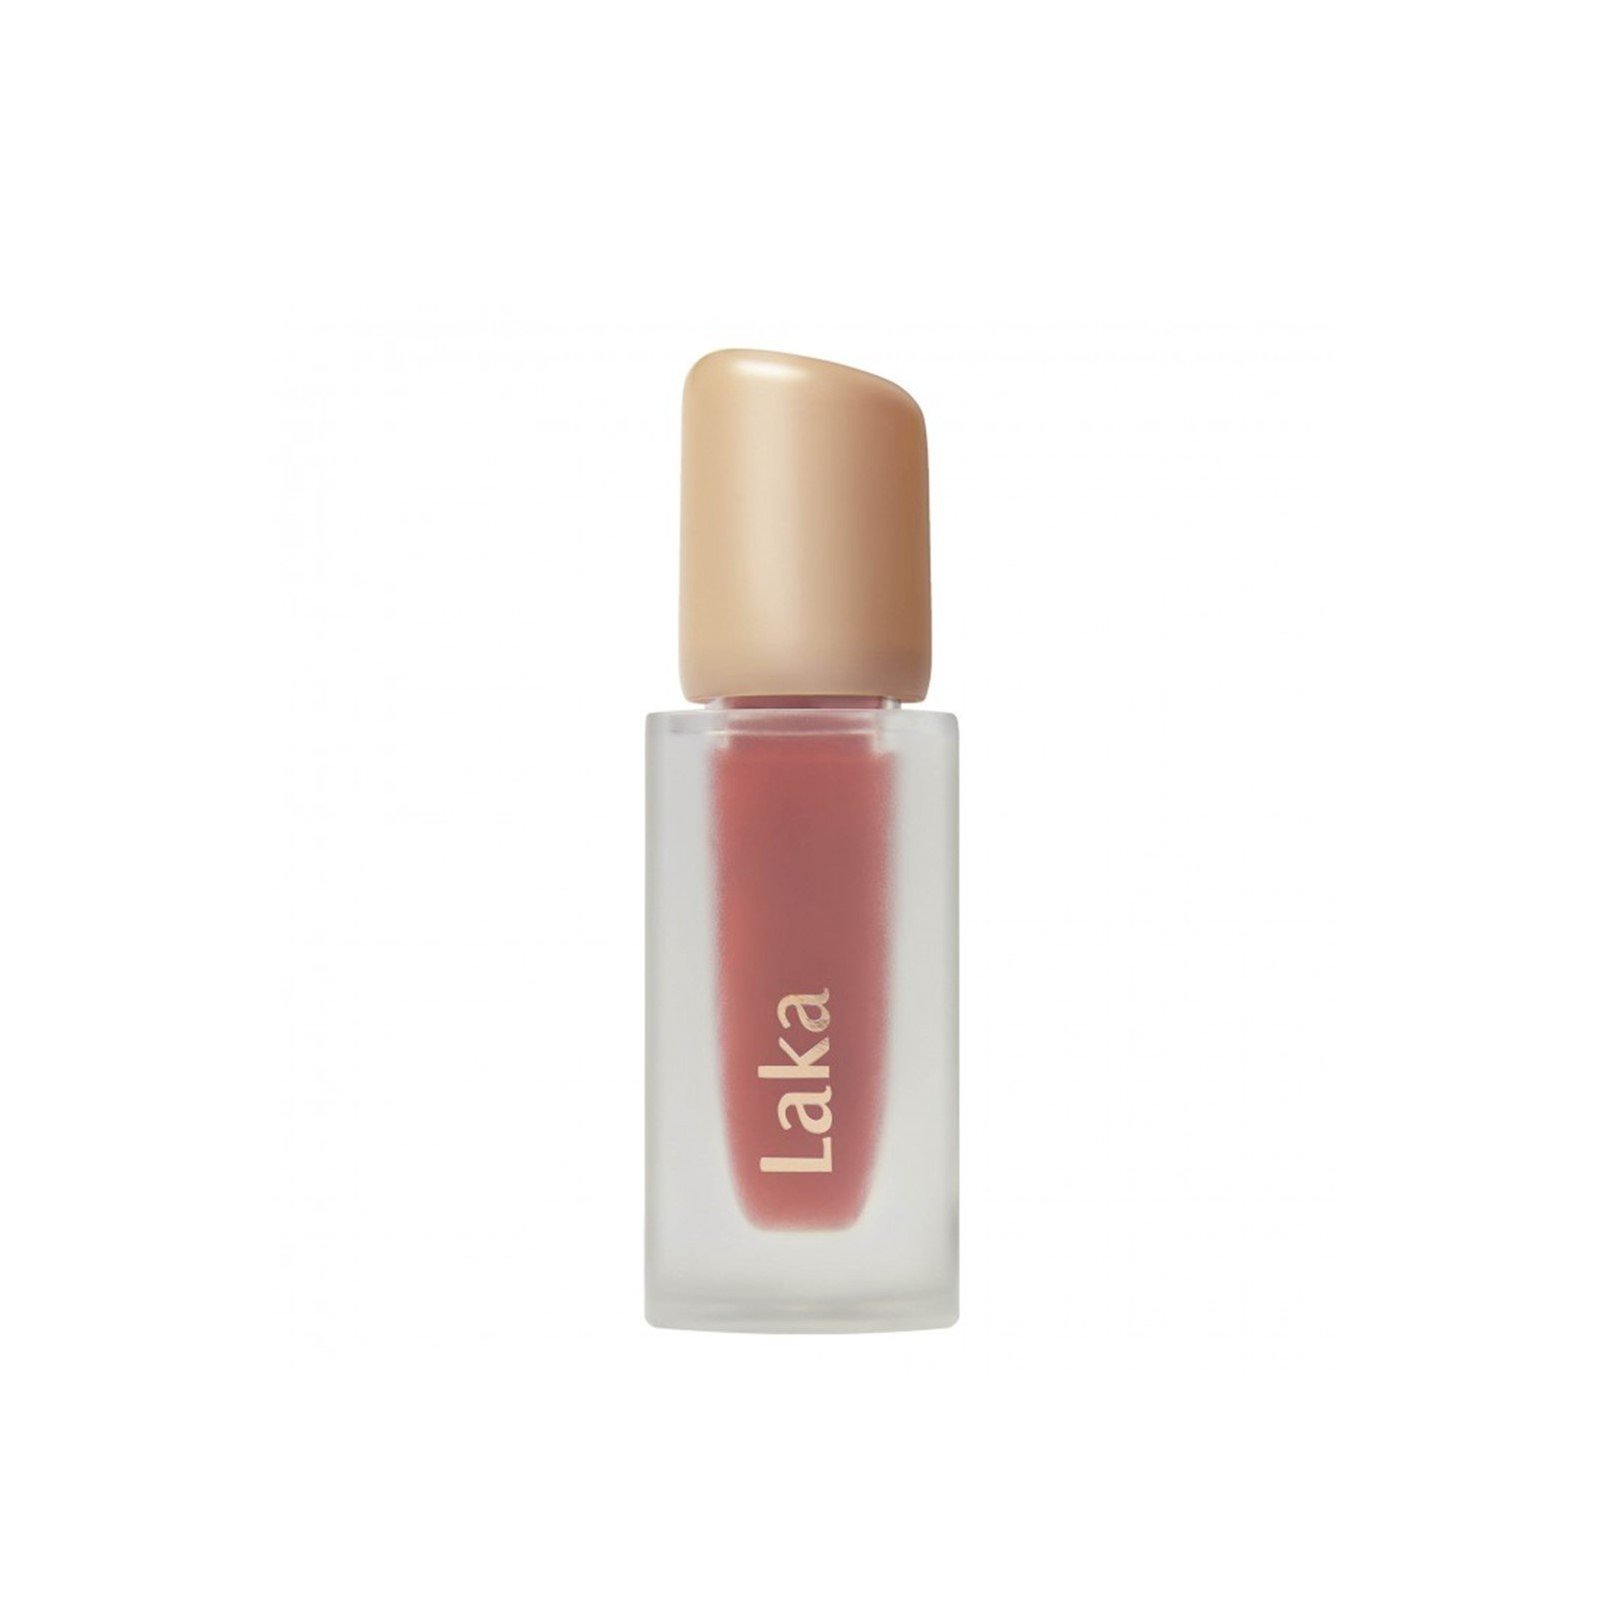 Laka Fruity Glam Lip Tint 101 Joyful 4.5g (0.15 oz)